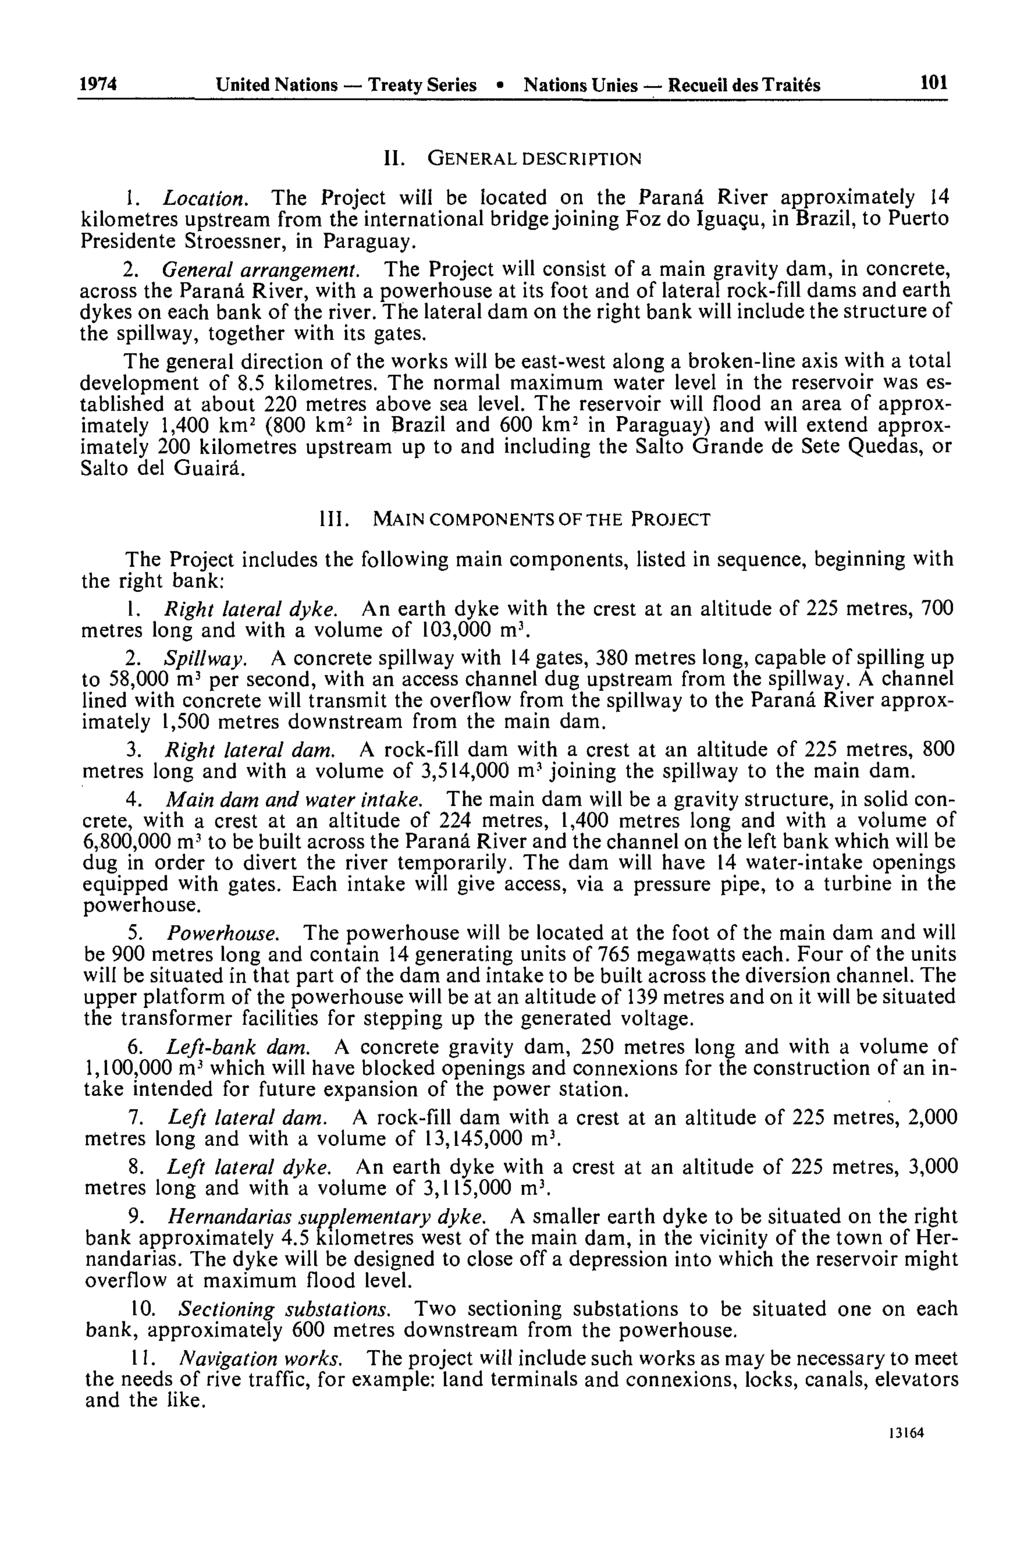 1974 United Nations Treaty Series Nations Unies Recueil des Traités 101 II. GENERAL DESCRIPTION 1. Location.